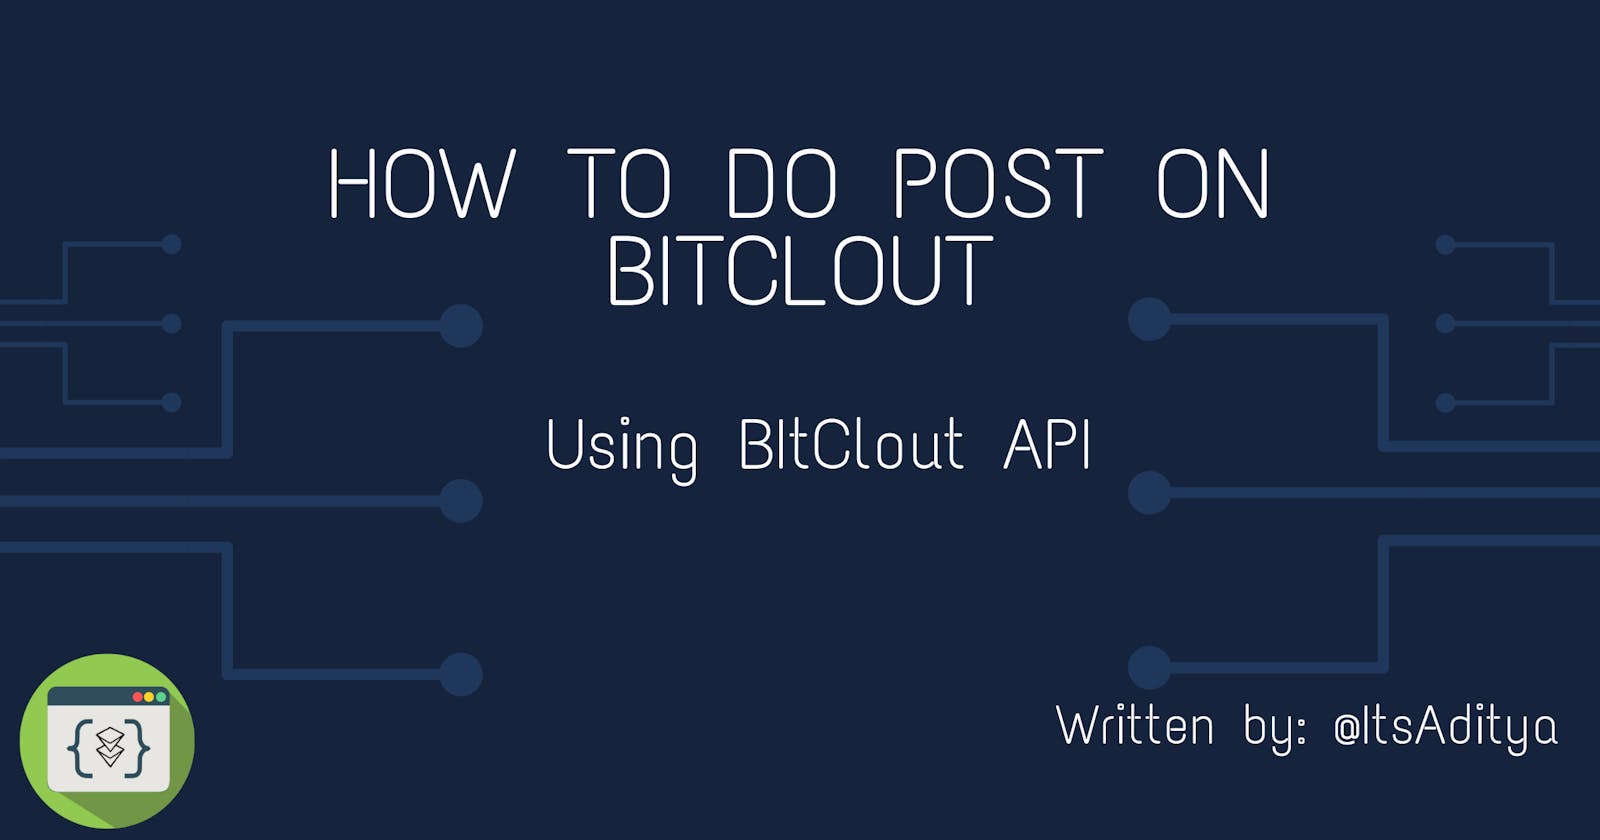 How to make post on BitClout using BItClout API